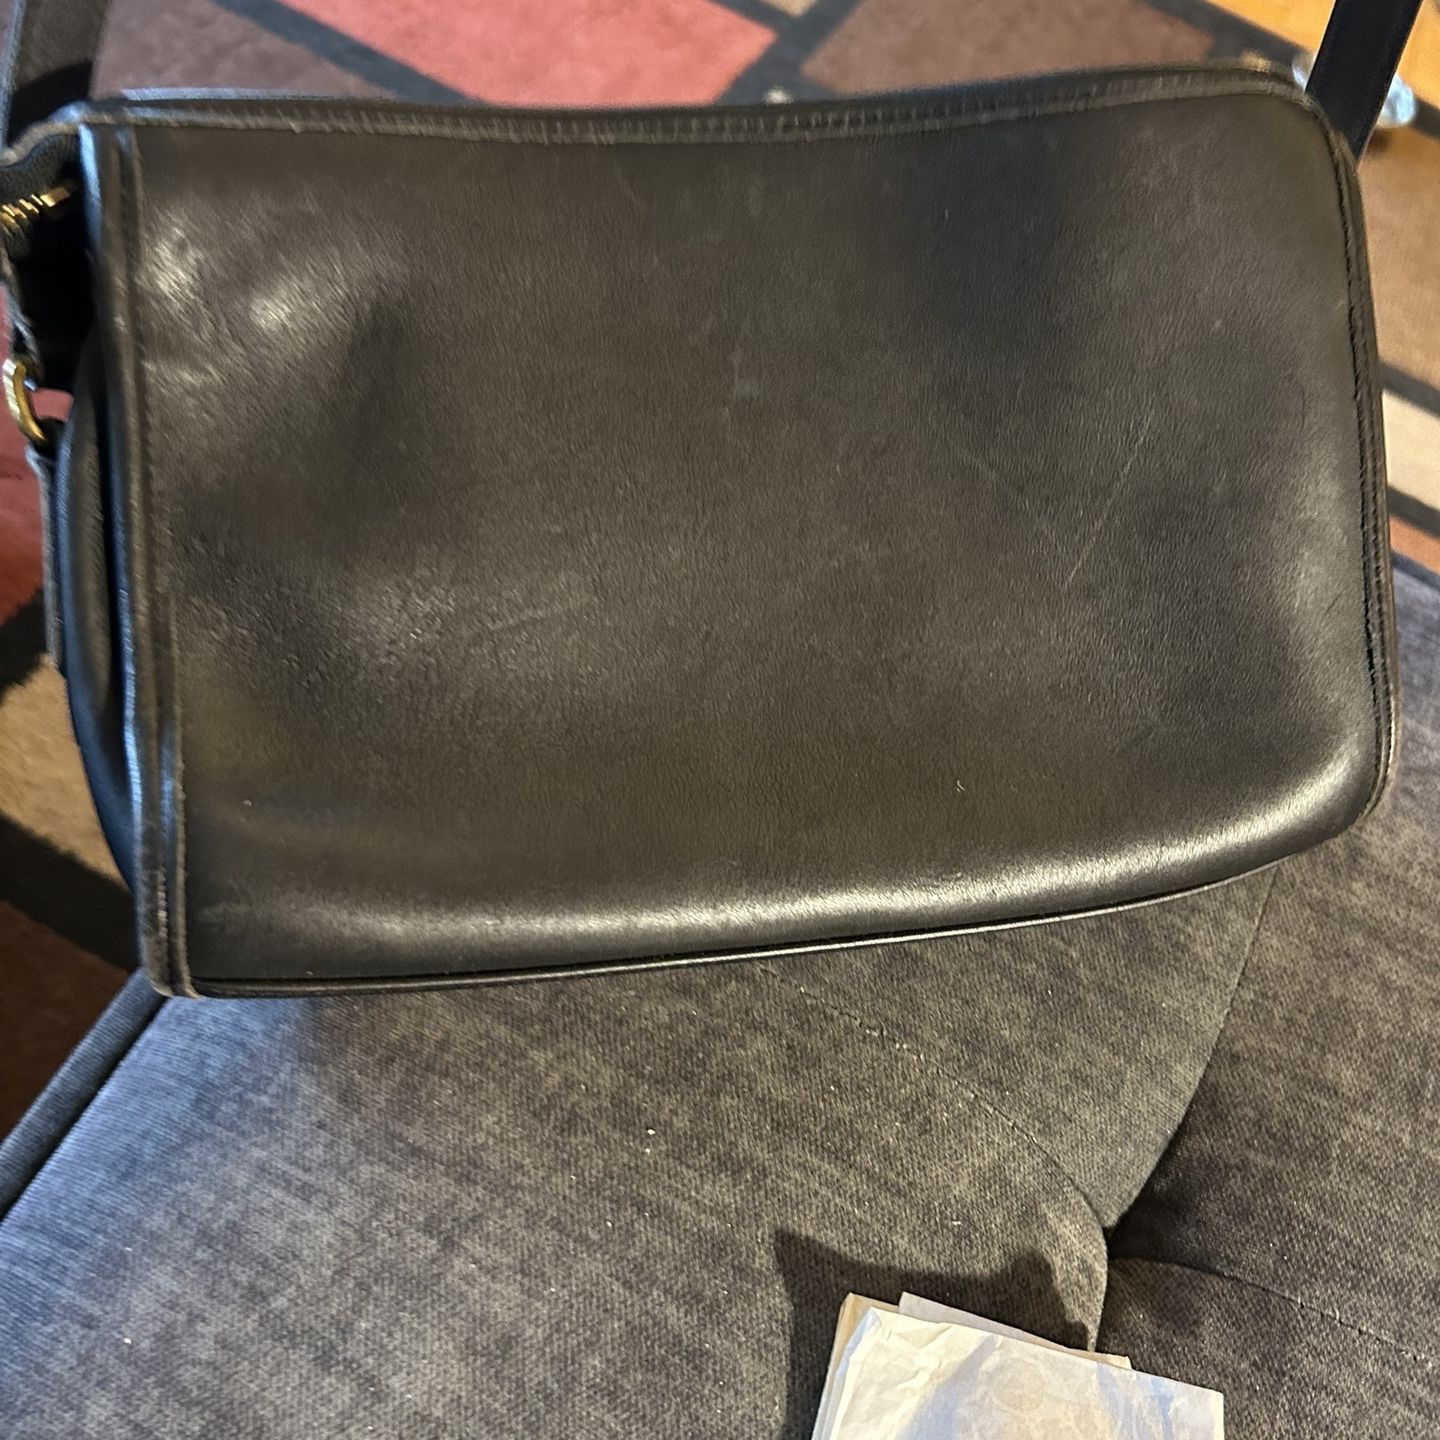 Vintage Coach purse for Sale in Papillion, NE - OfferUp